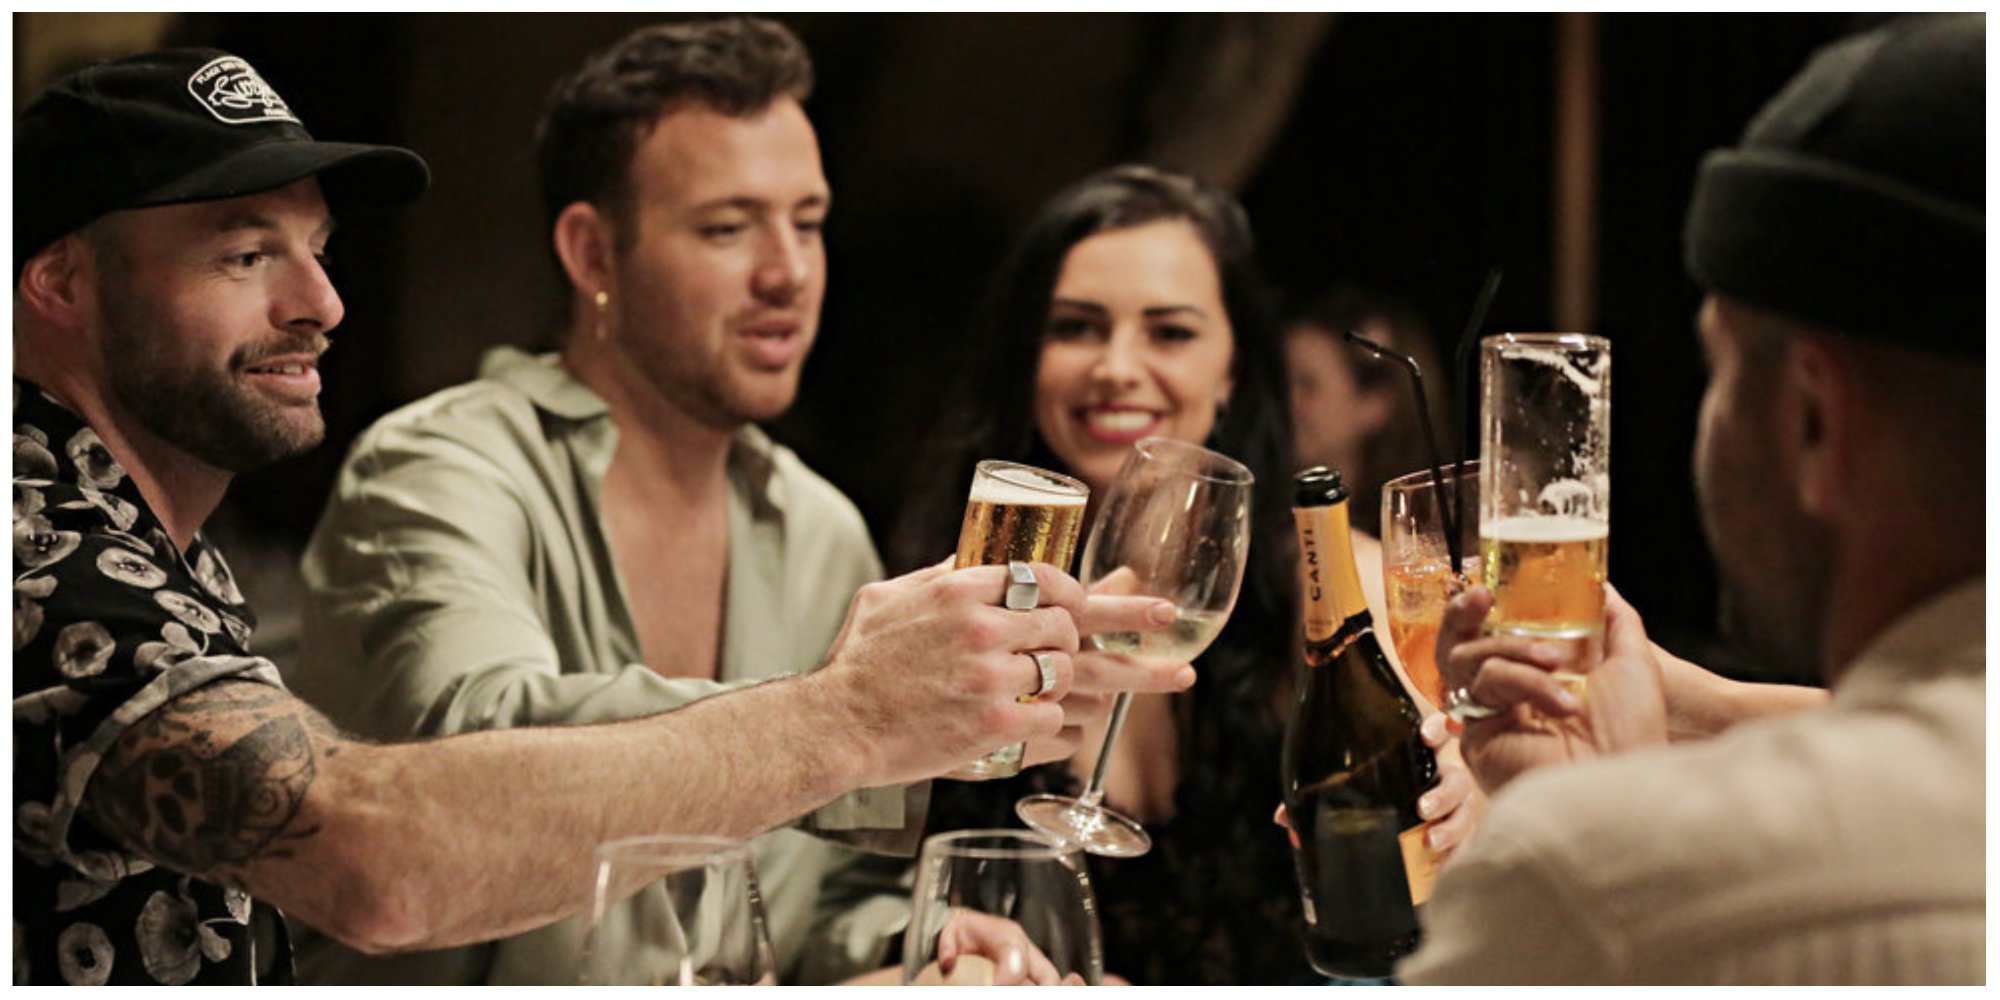 Dave White, Kyle Viljoen, Natasha Webb toast beer and champagne glasses at dinner 